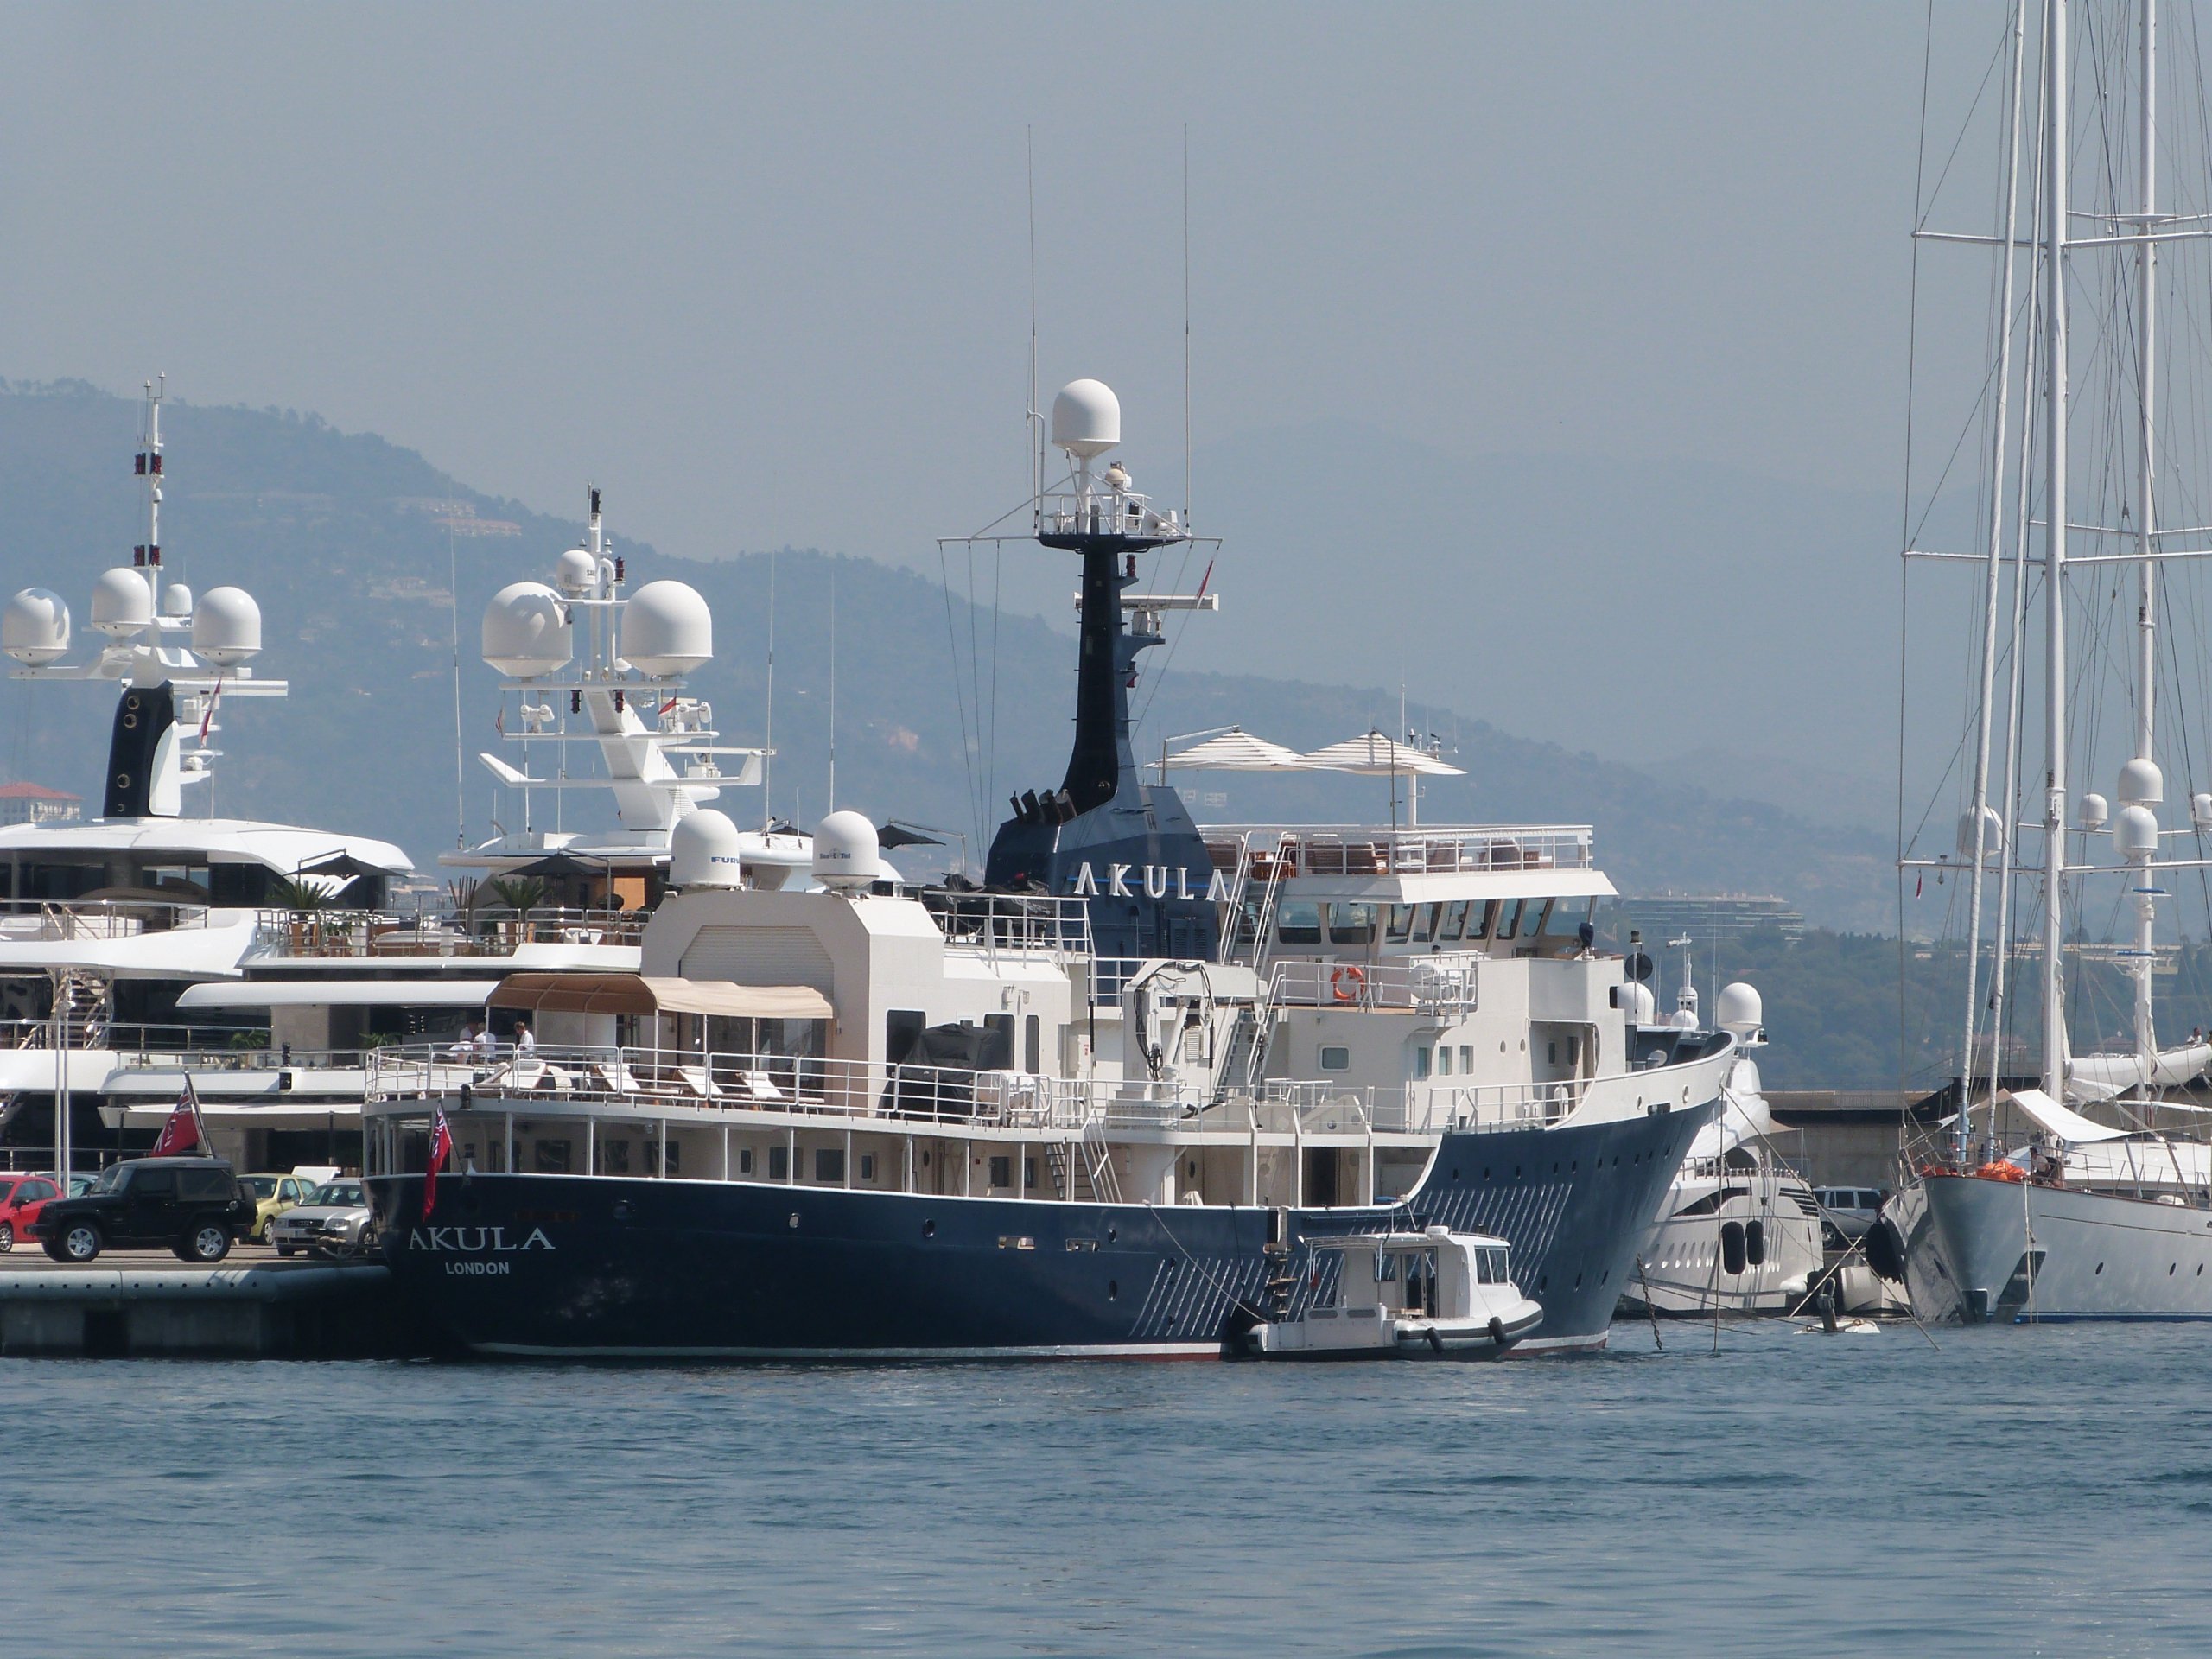 OMNIA Yacht • (أكولا سابقًا) • أميلز • 2008 • المالك السابق جوناثان فايمان